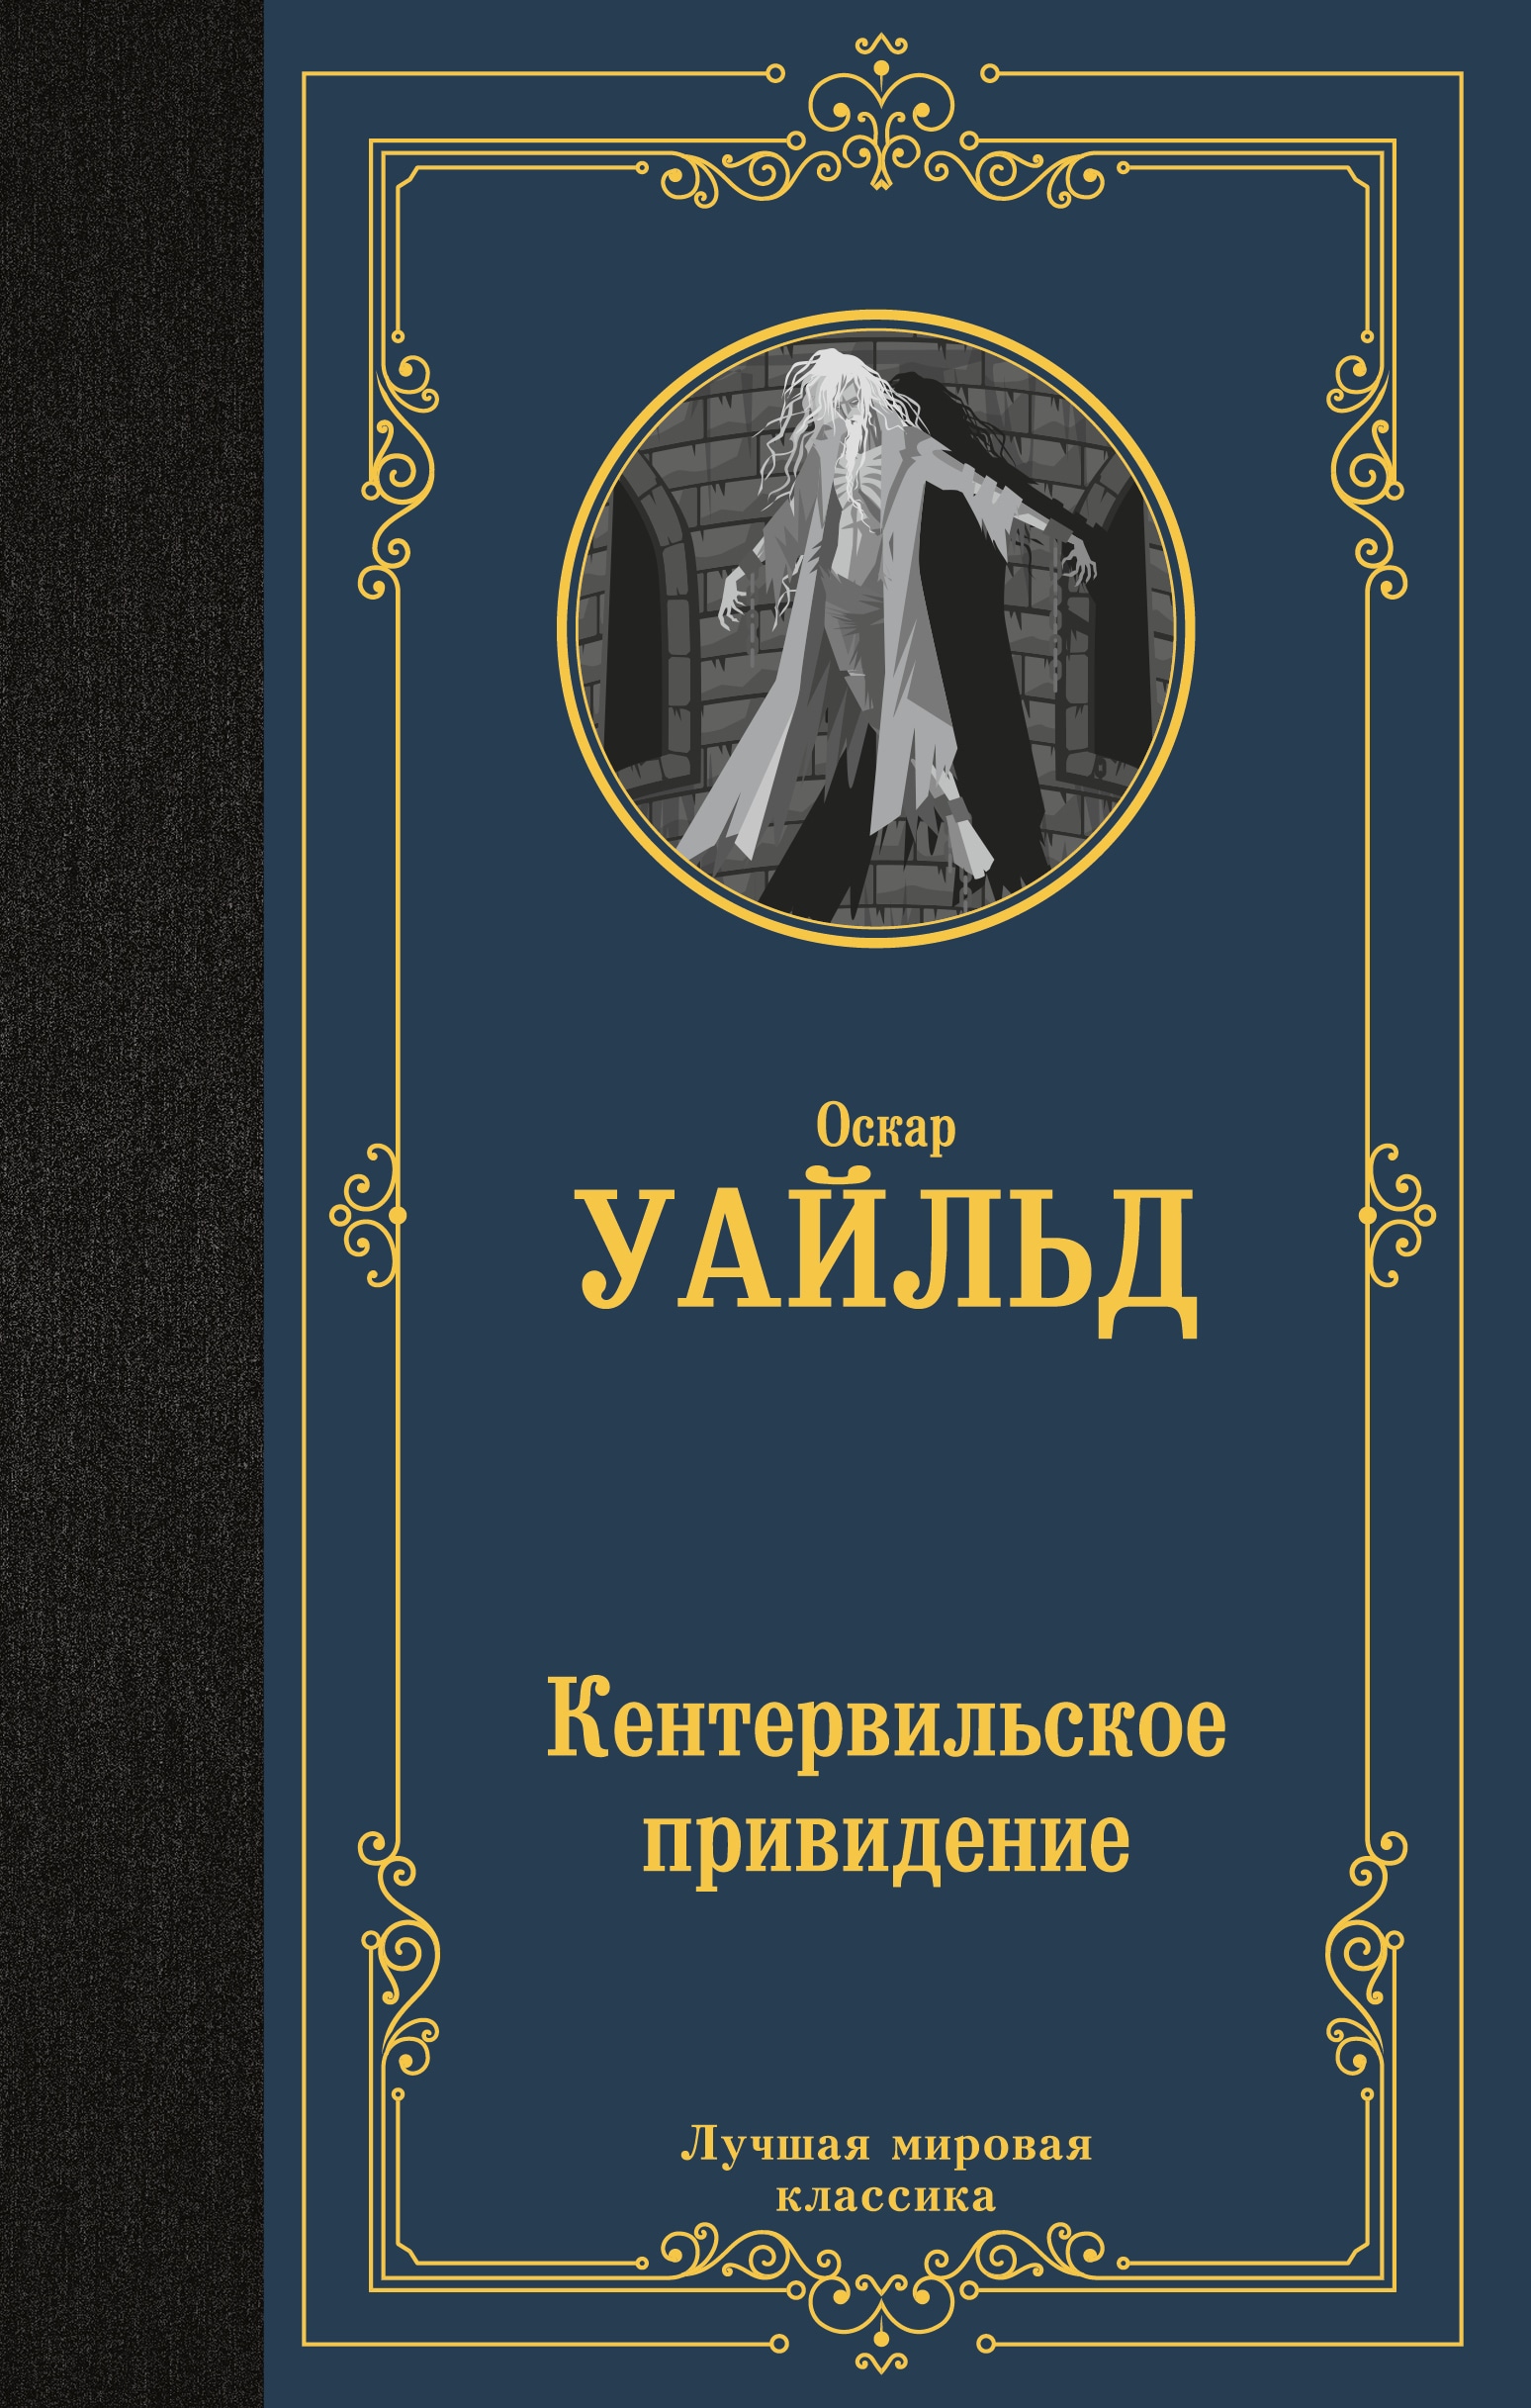 Book “Кентервильское привидение” by Оскар Уайльд — 2022